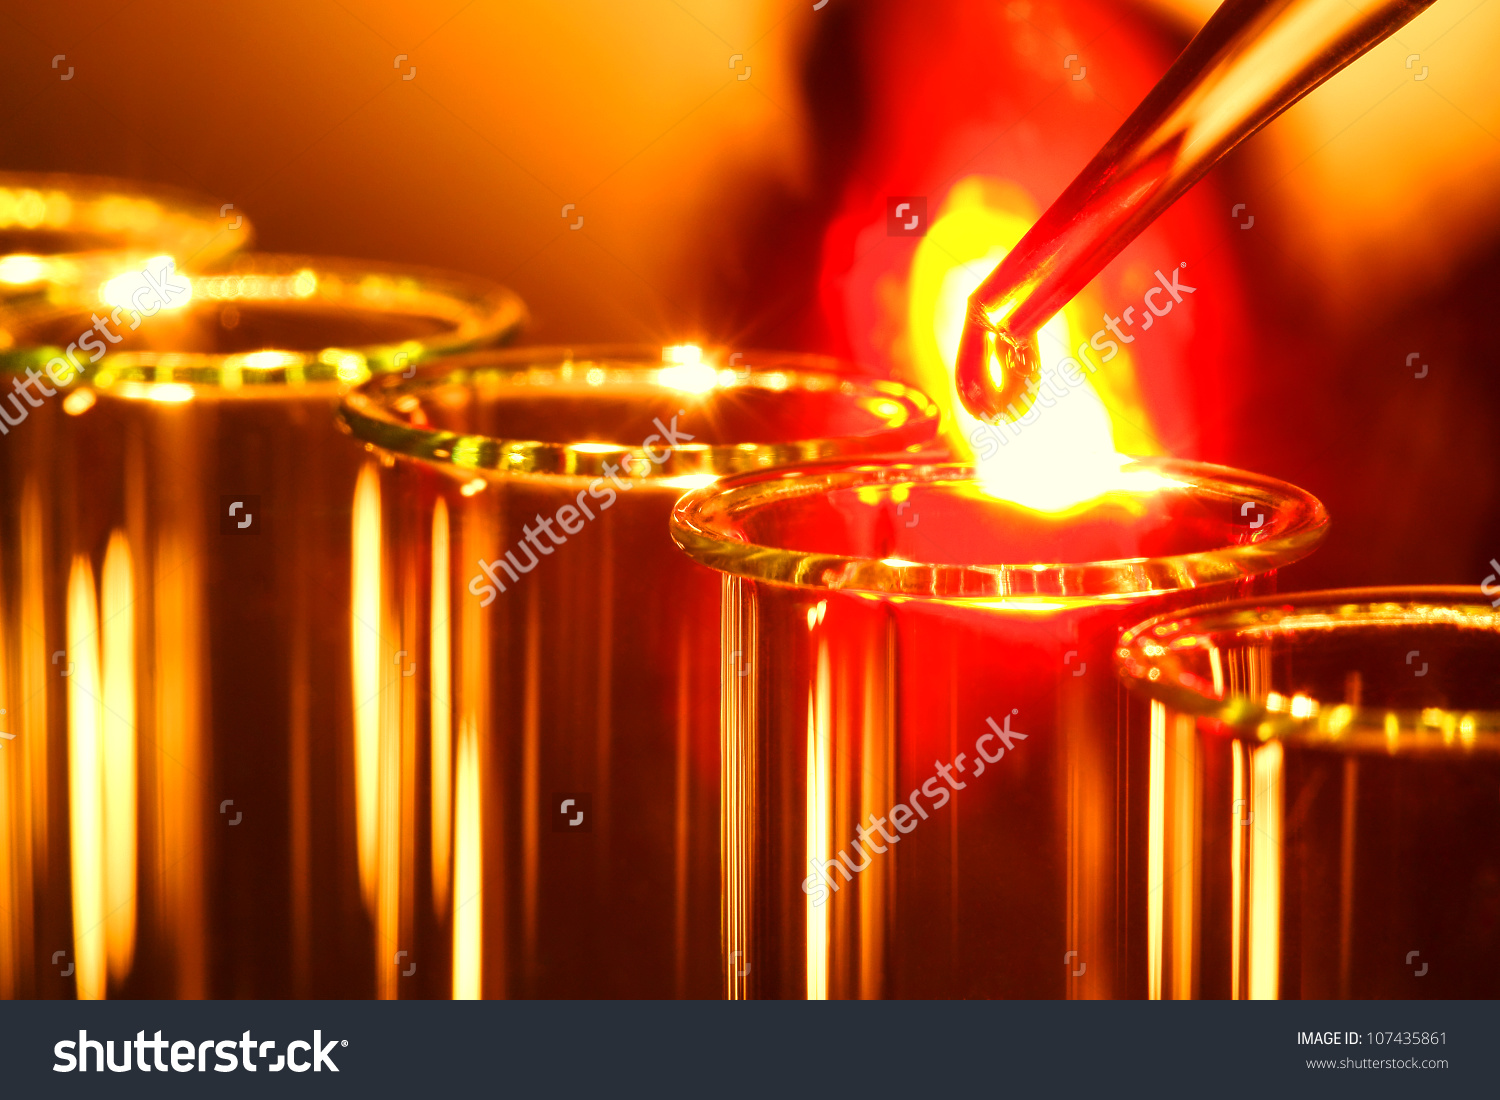 Laboratory Pipette Drop Burning Hot Melting Stock Photo 107435861.